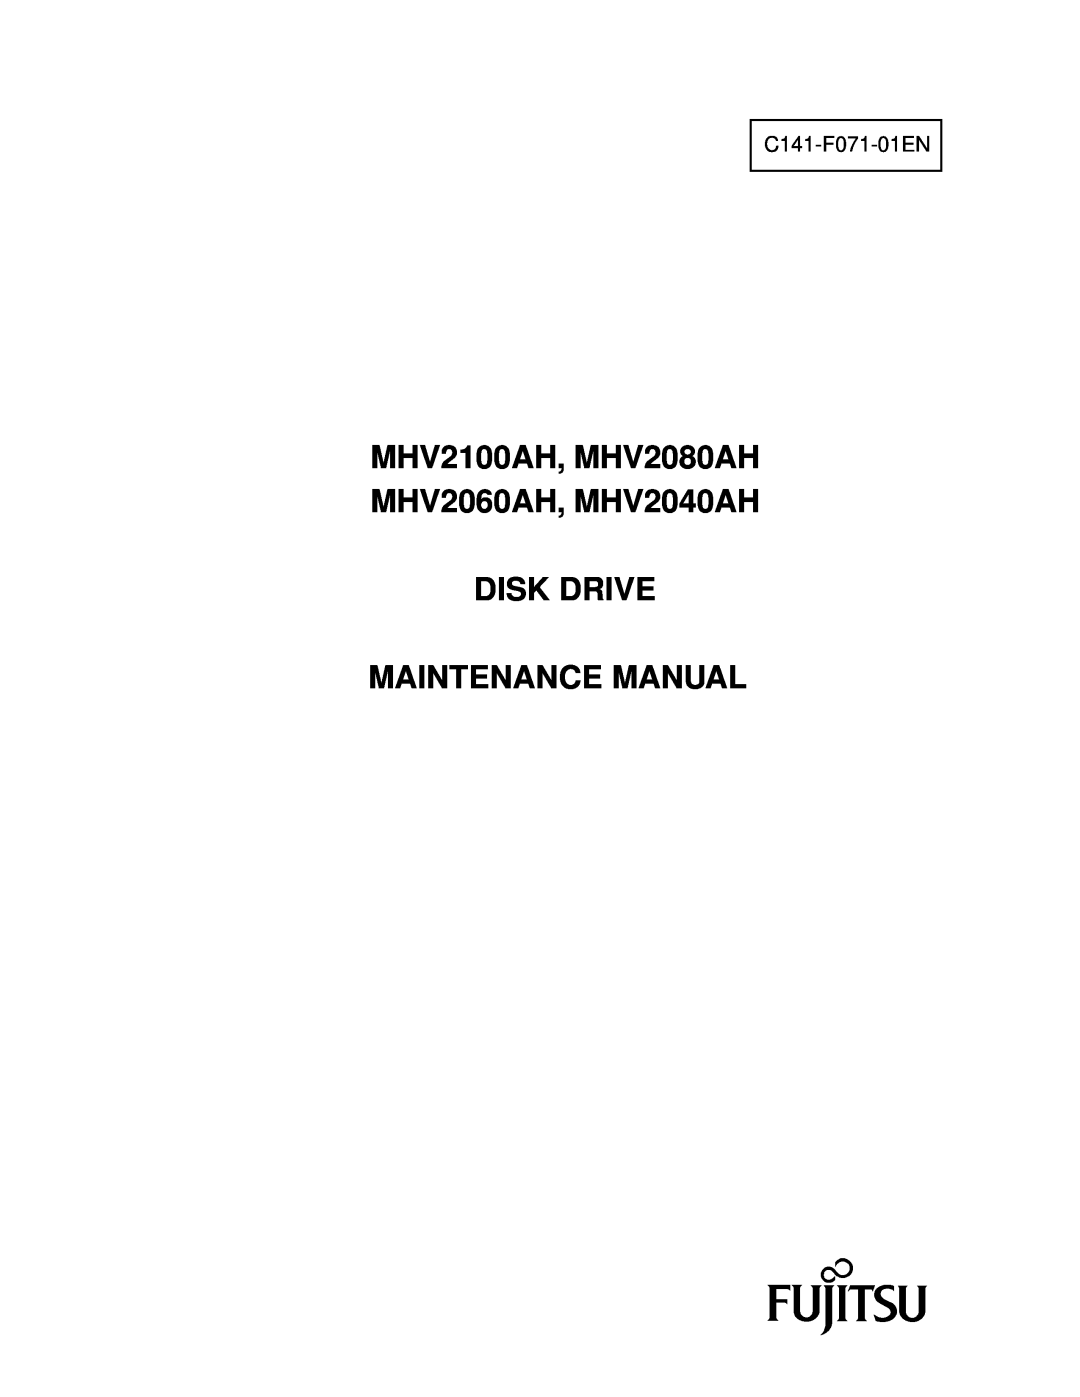 Fujitsu manual MHV2100AH, MHV2080AH MHV2060AH, MHV2040AH DISK DRIVE, Maintenance Manual, C141-F071-01EN 